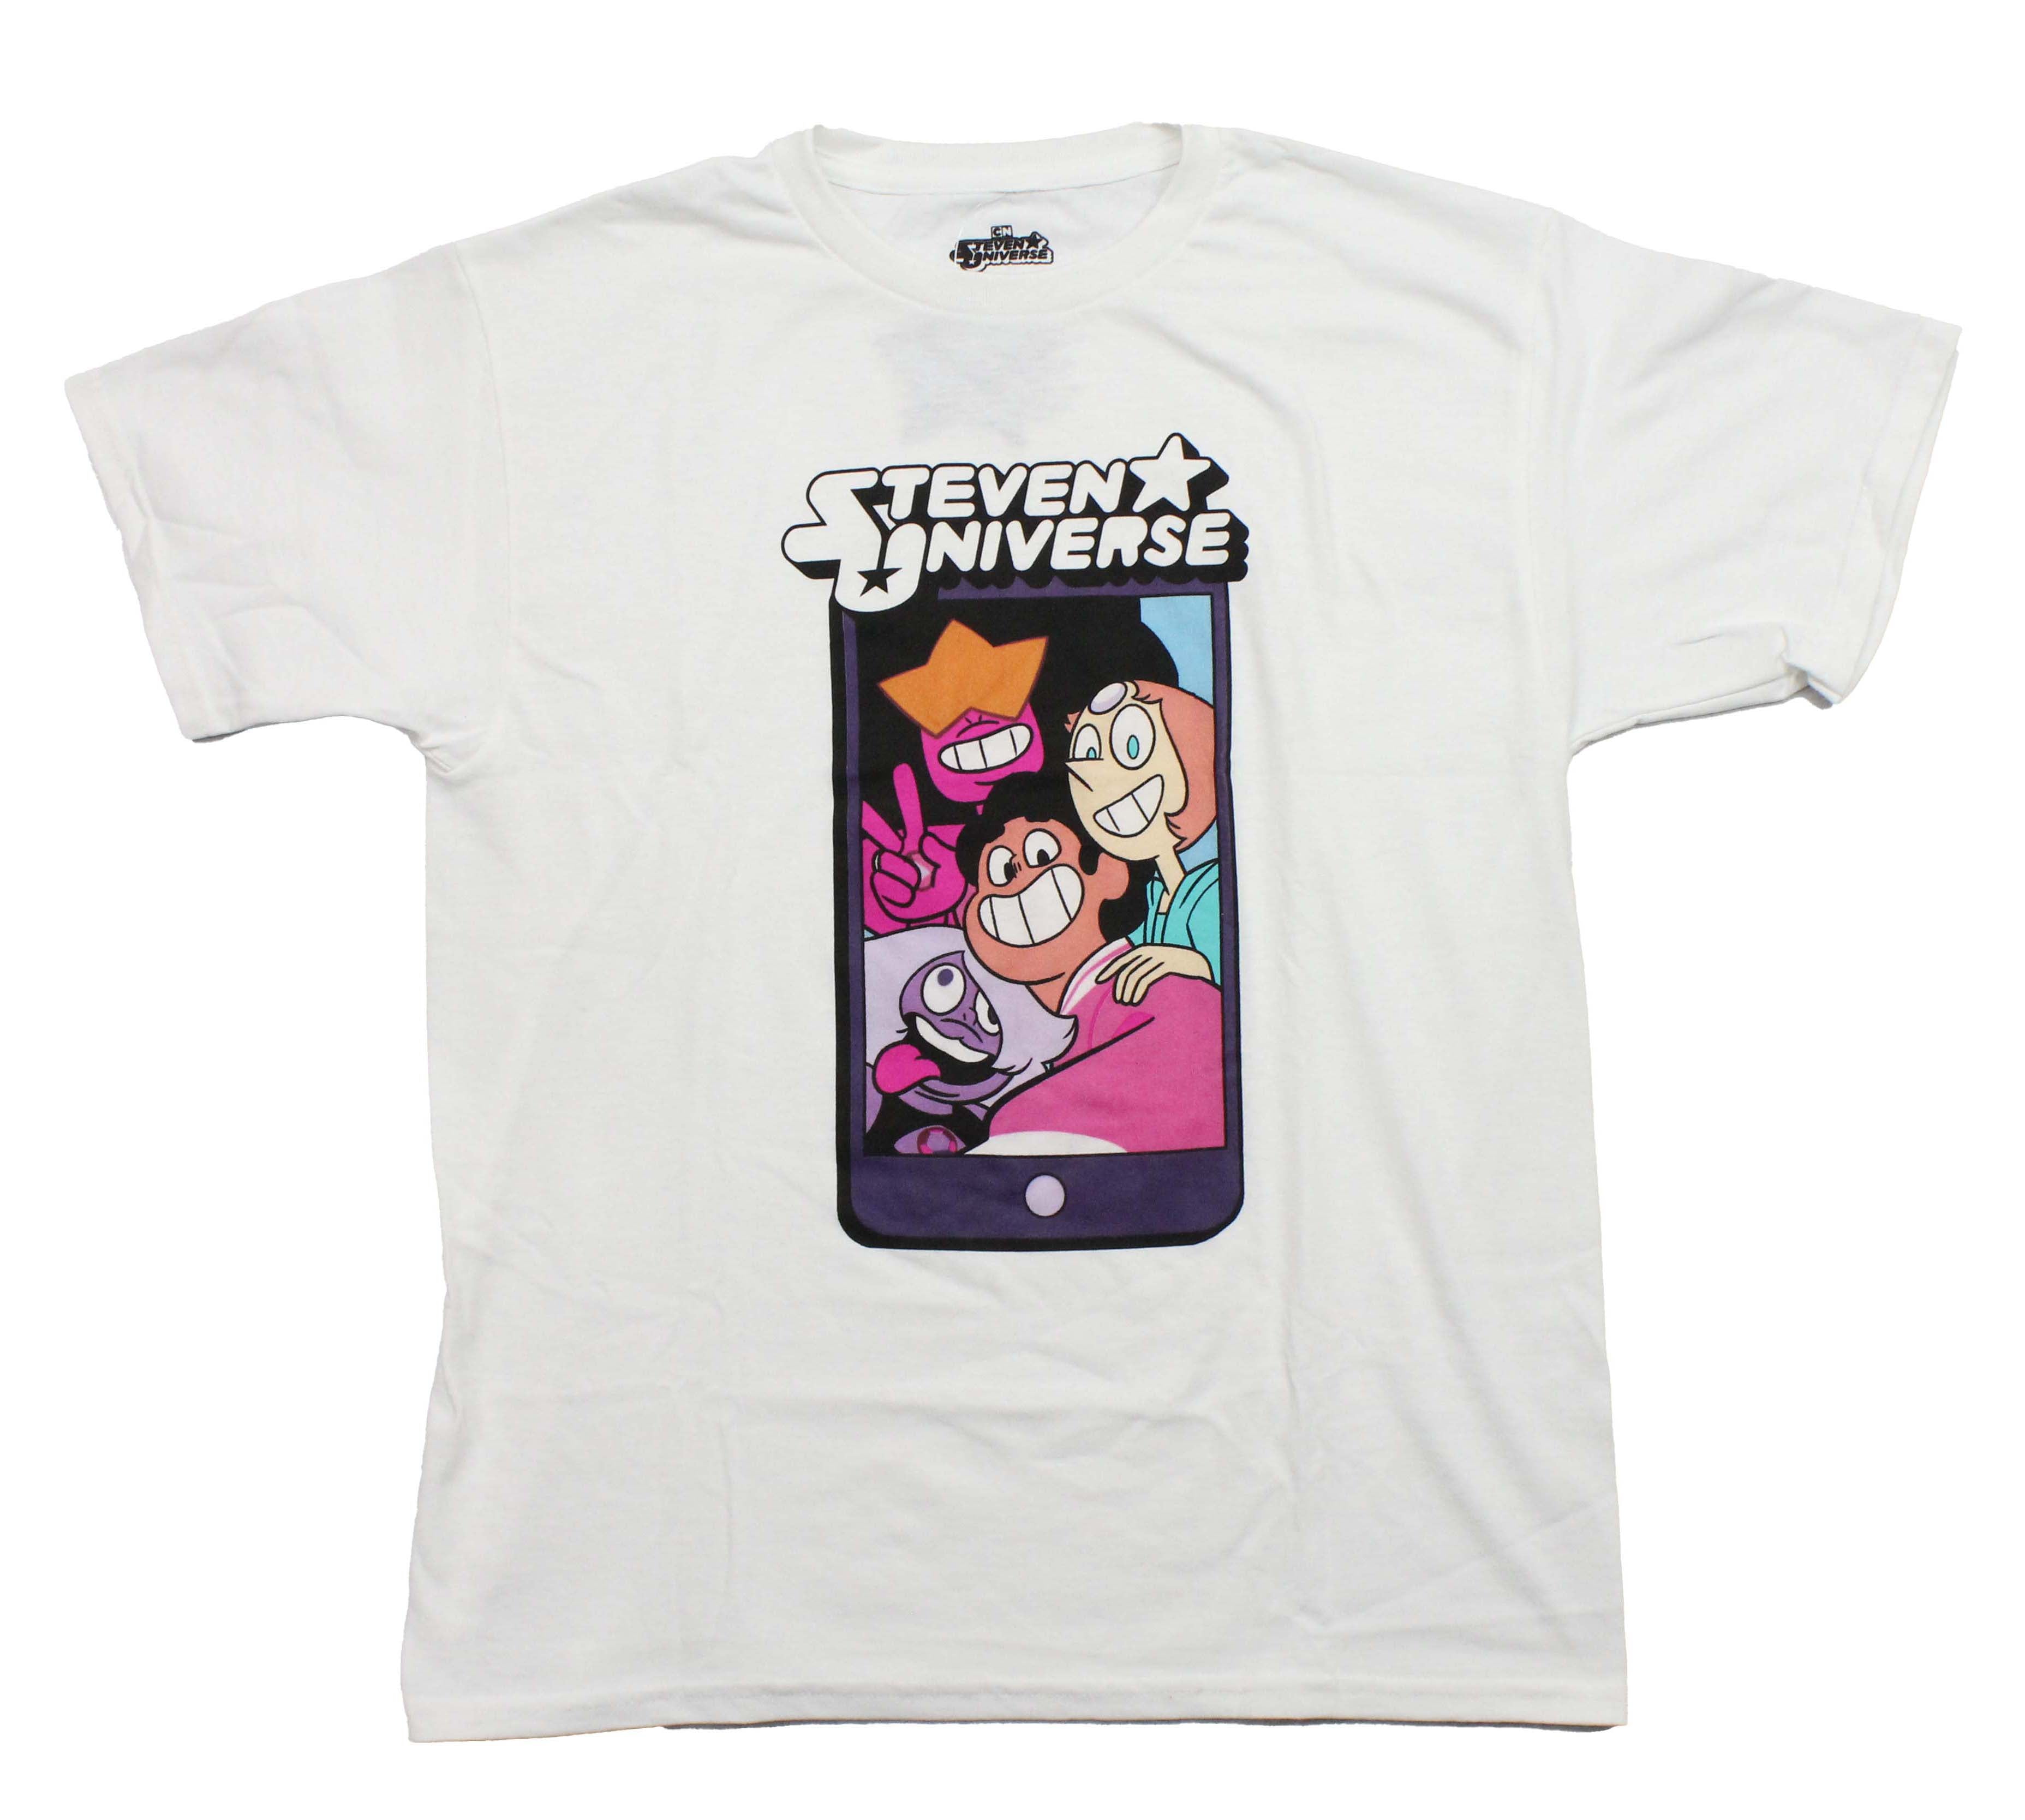 Steven Universe Mens T-Shirt - Group Selfie Pic